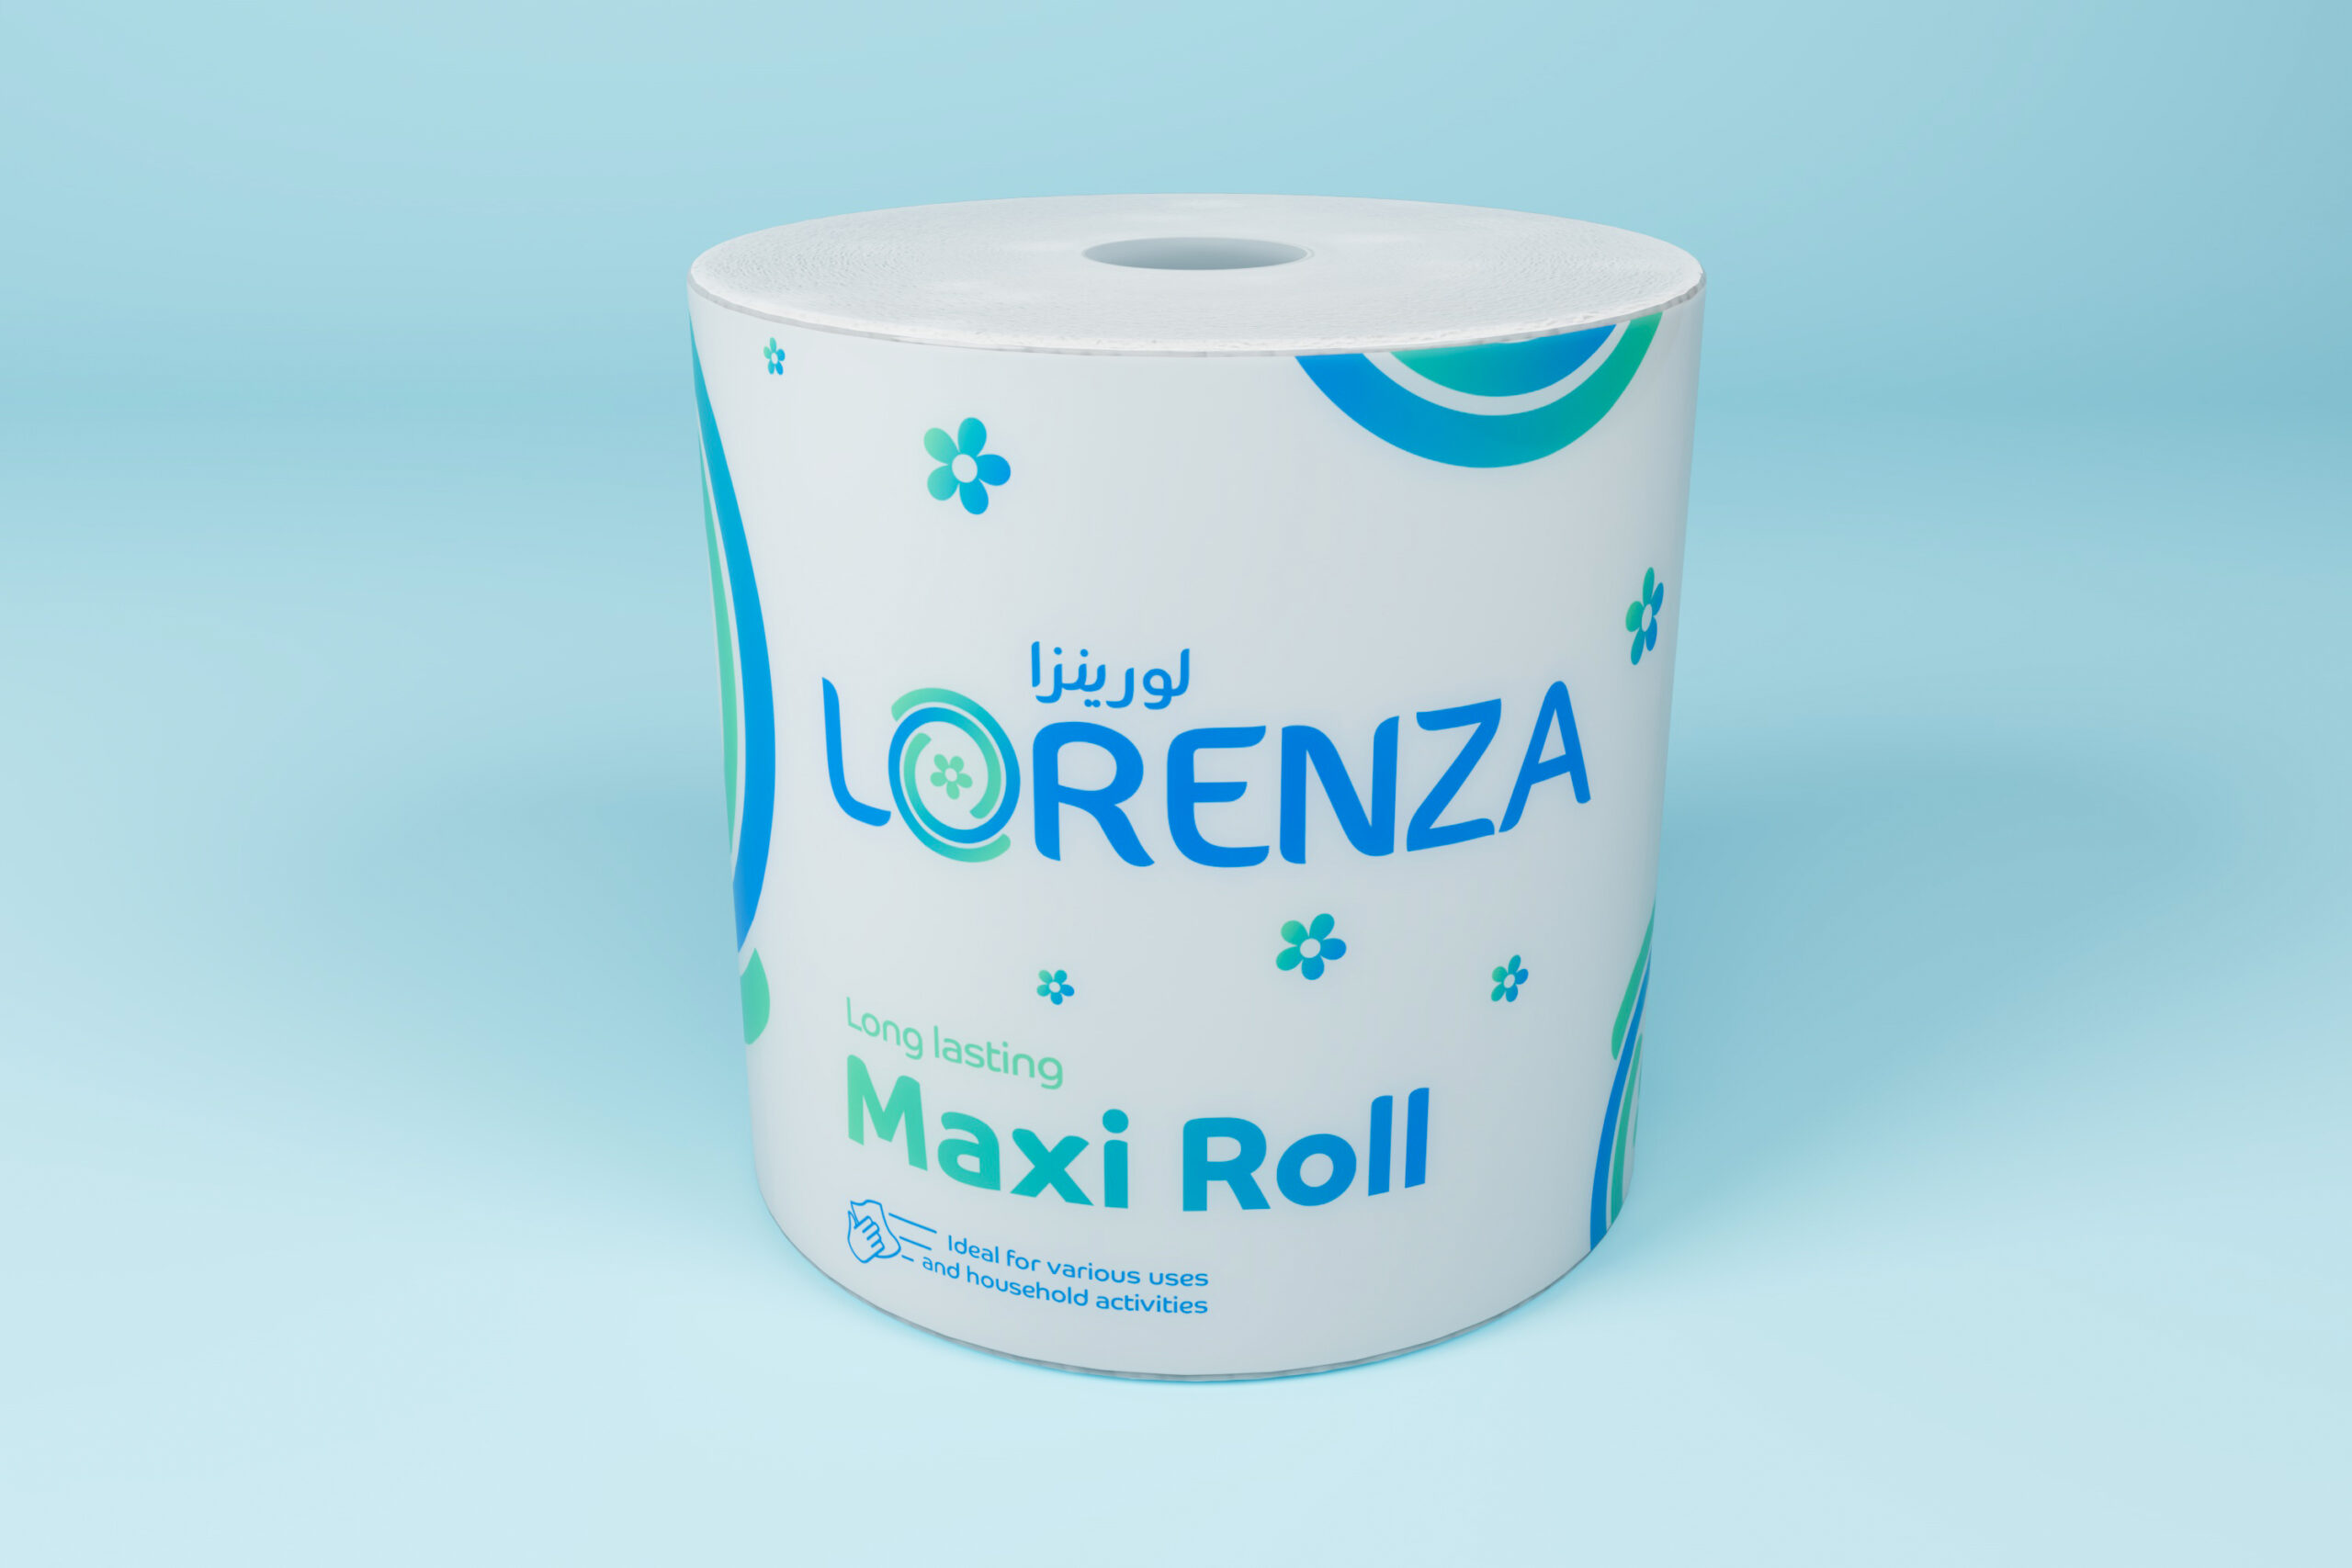 Lorenza Maxi Roll Sheet Size 20x20x20cm Number PLY 2 SKU 750 Sheet